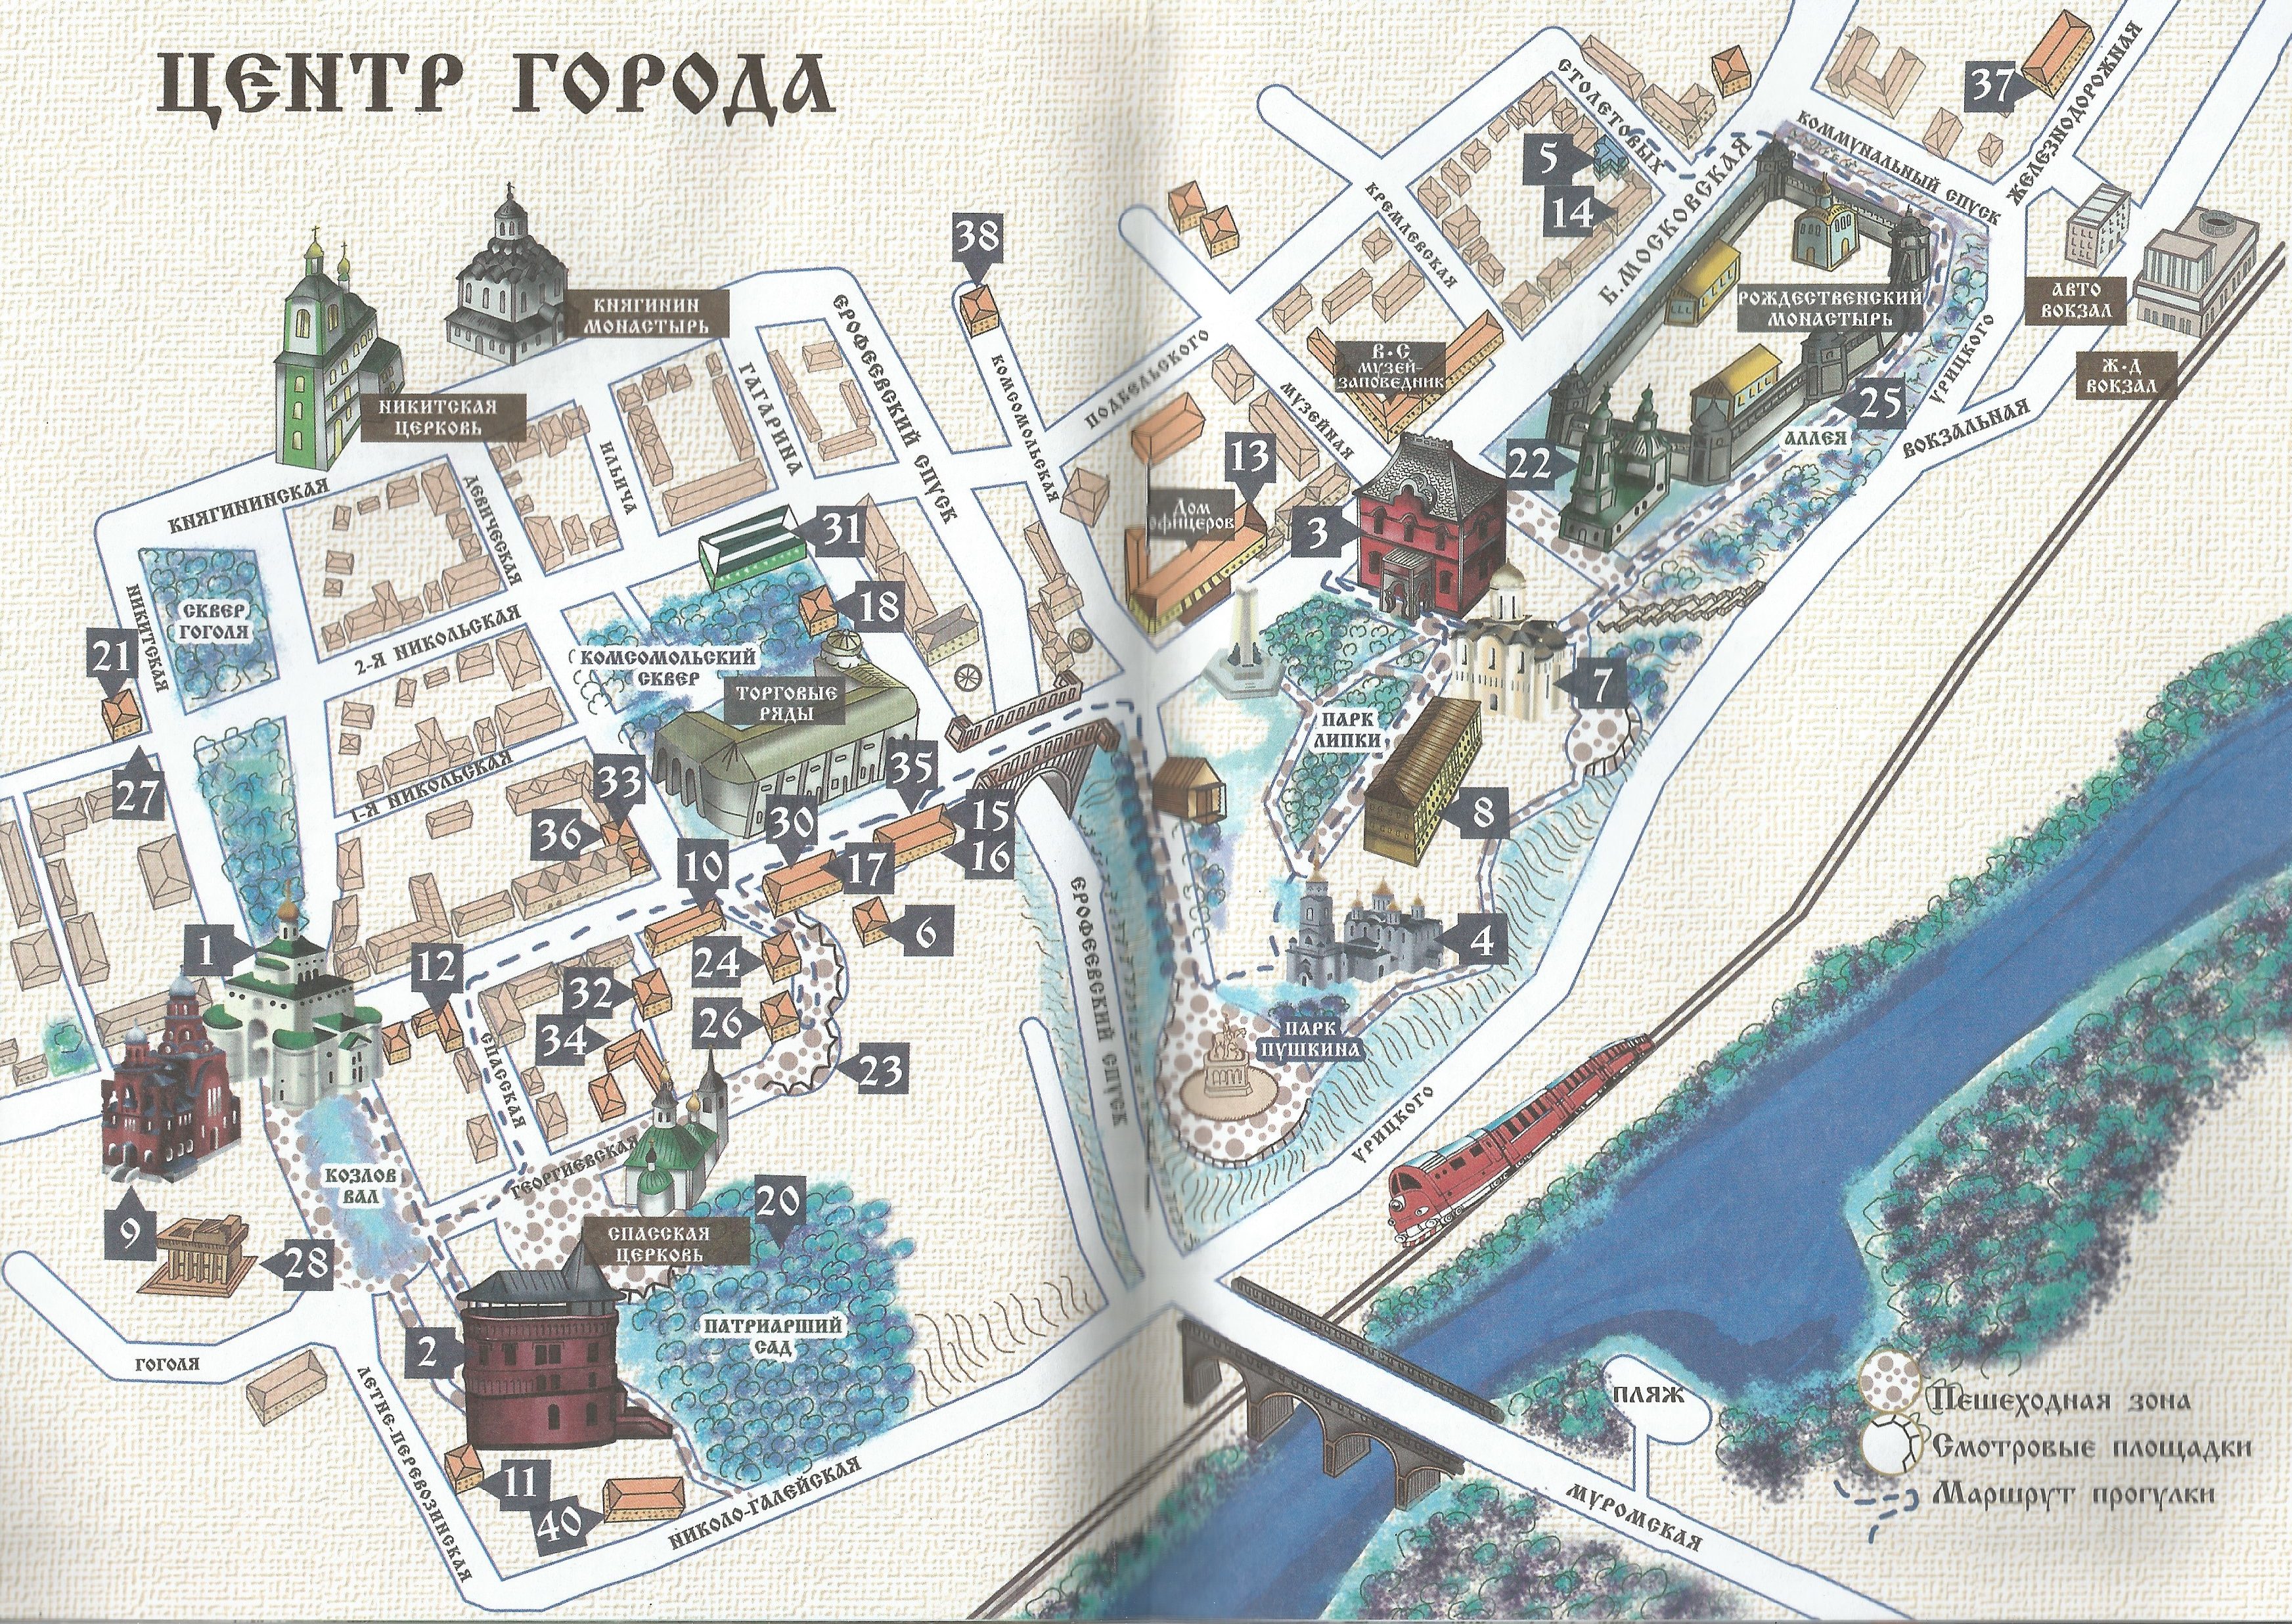 Карта Владимира Фото